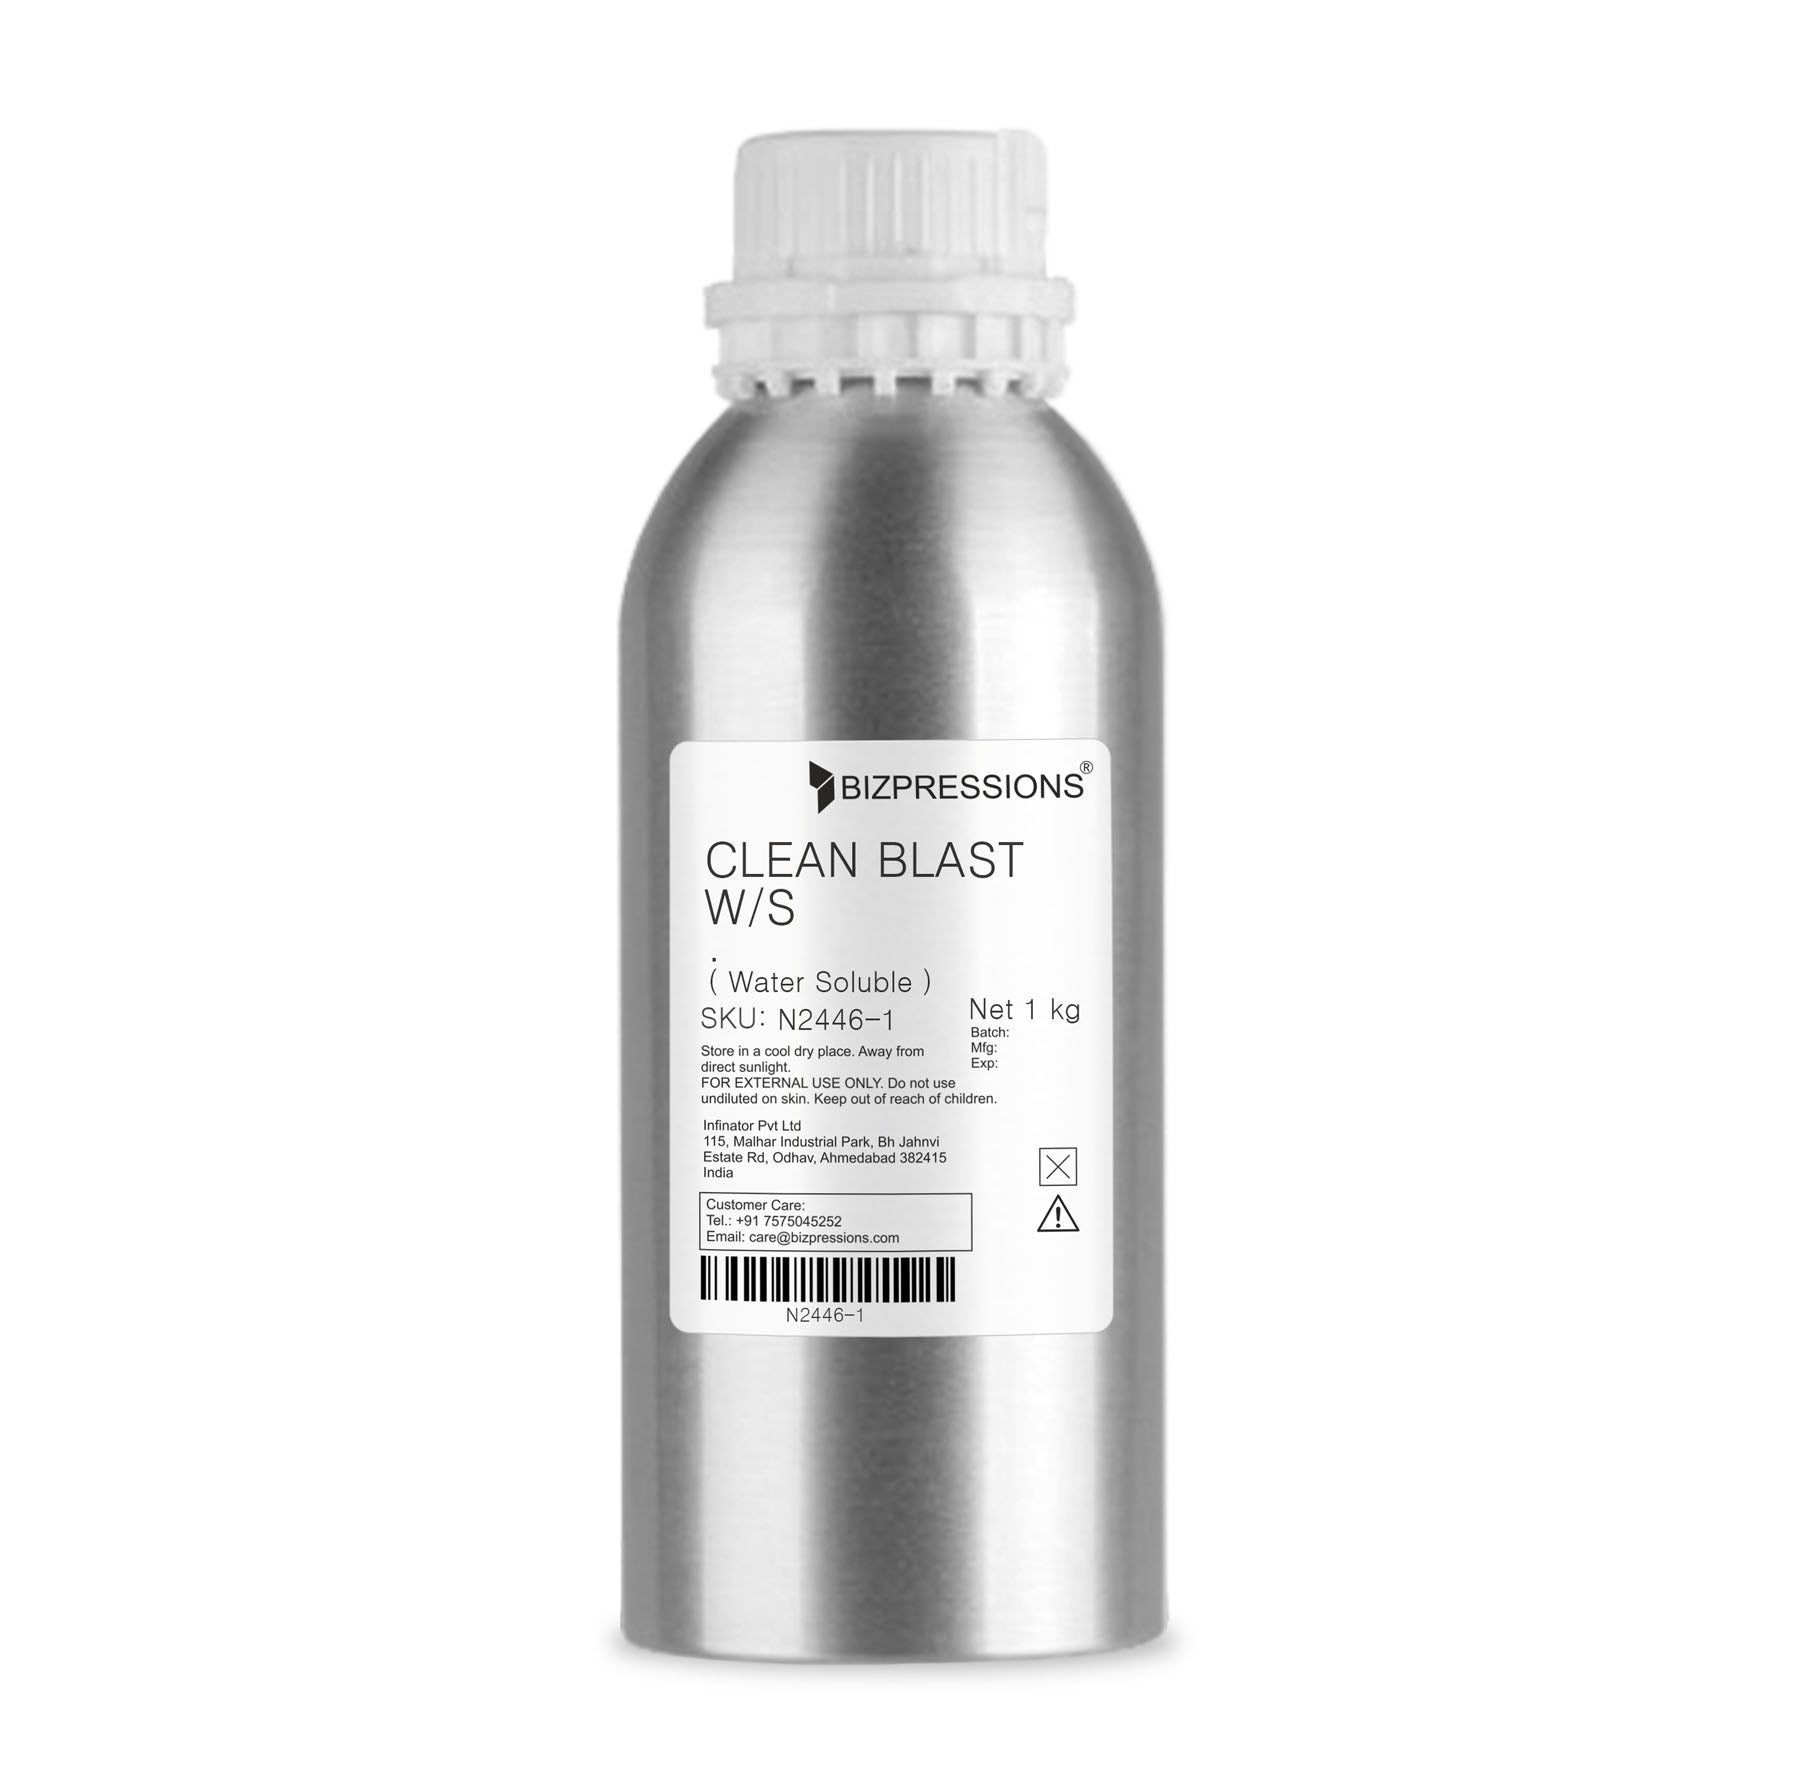 CLEAN BLAST W/S - Fragrance ( Water Soluble ) - 1 kg